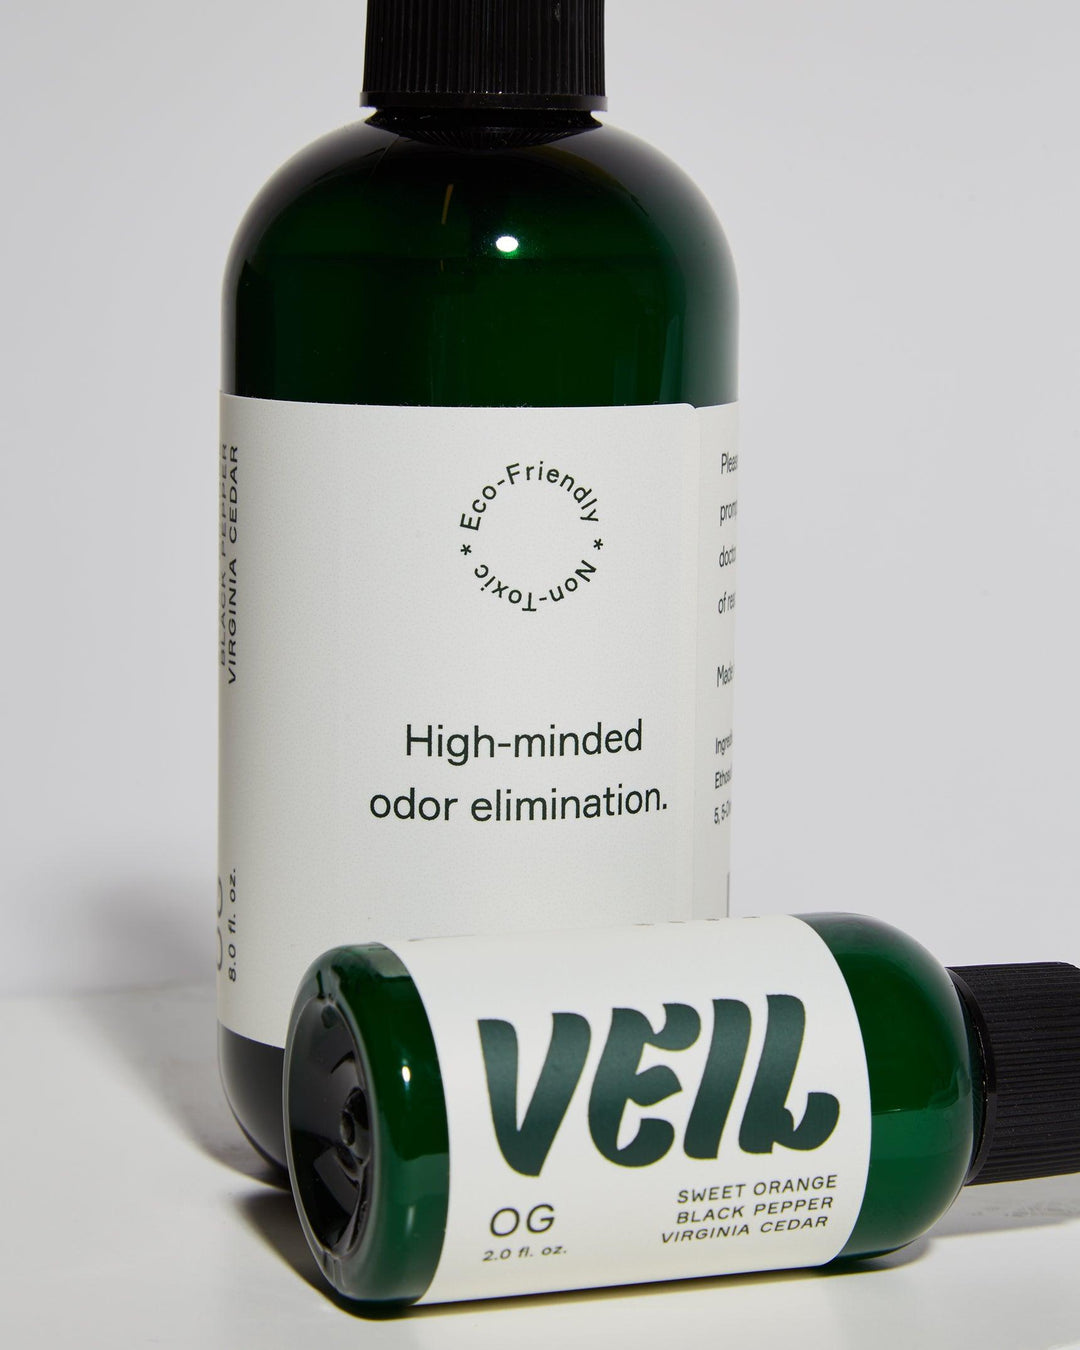 veil cannabis odor eliminator spray bottles